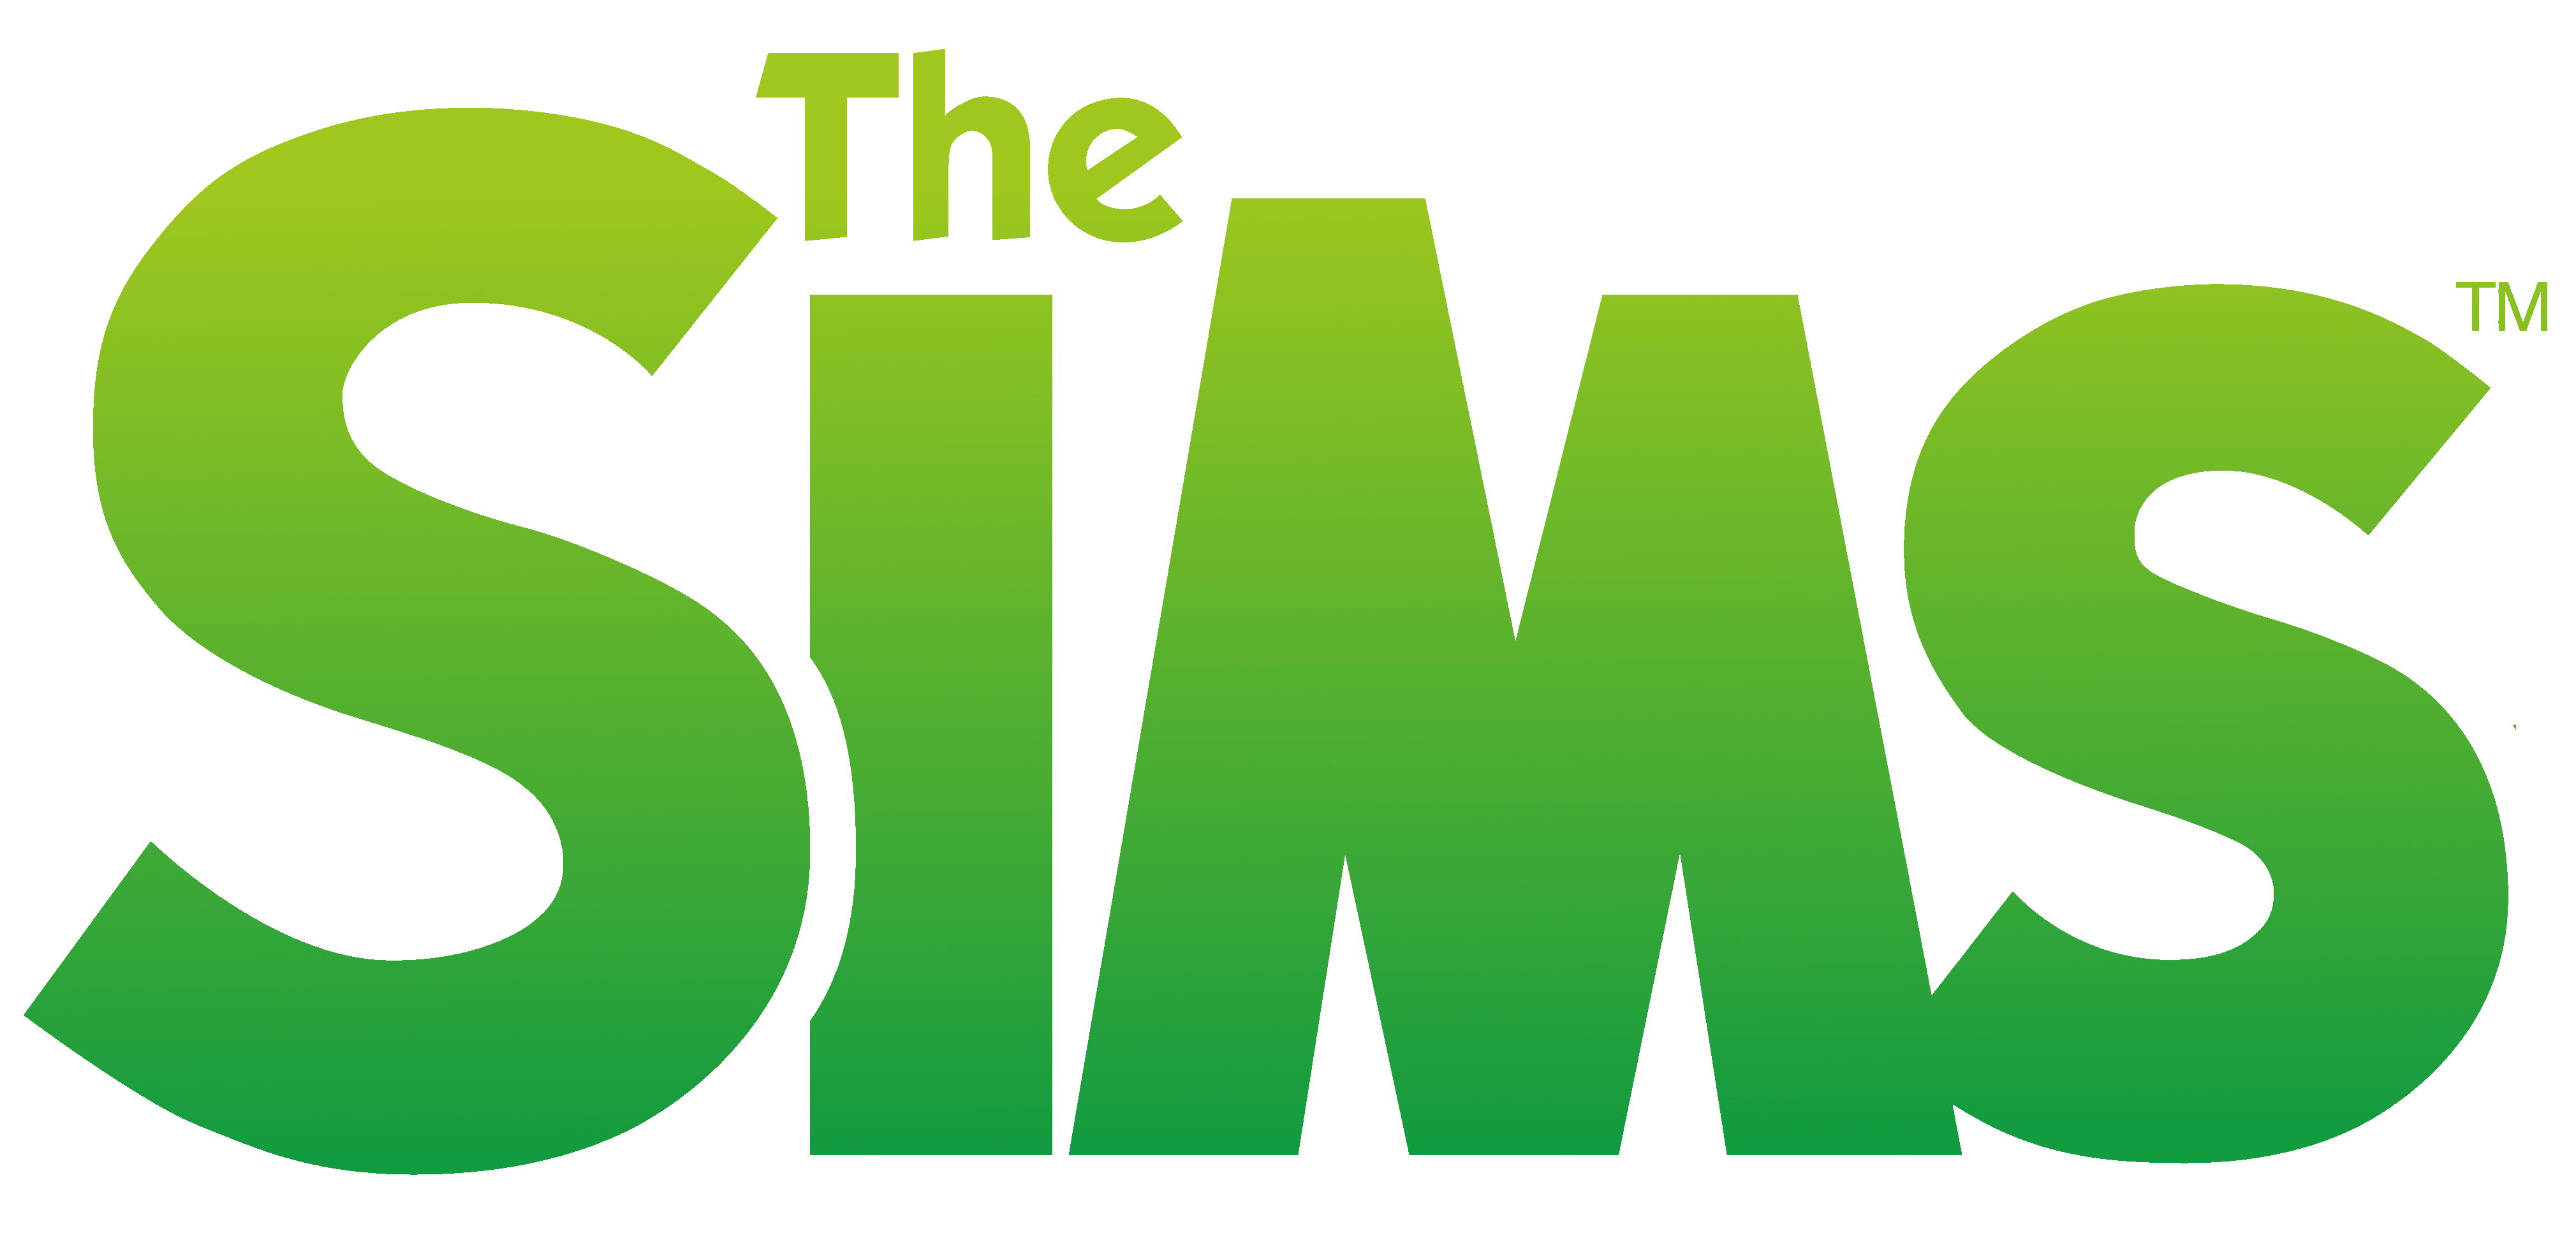 The Sims logo, logotype